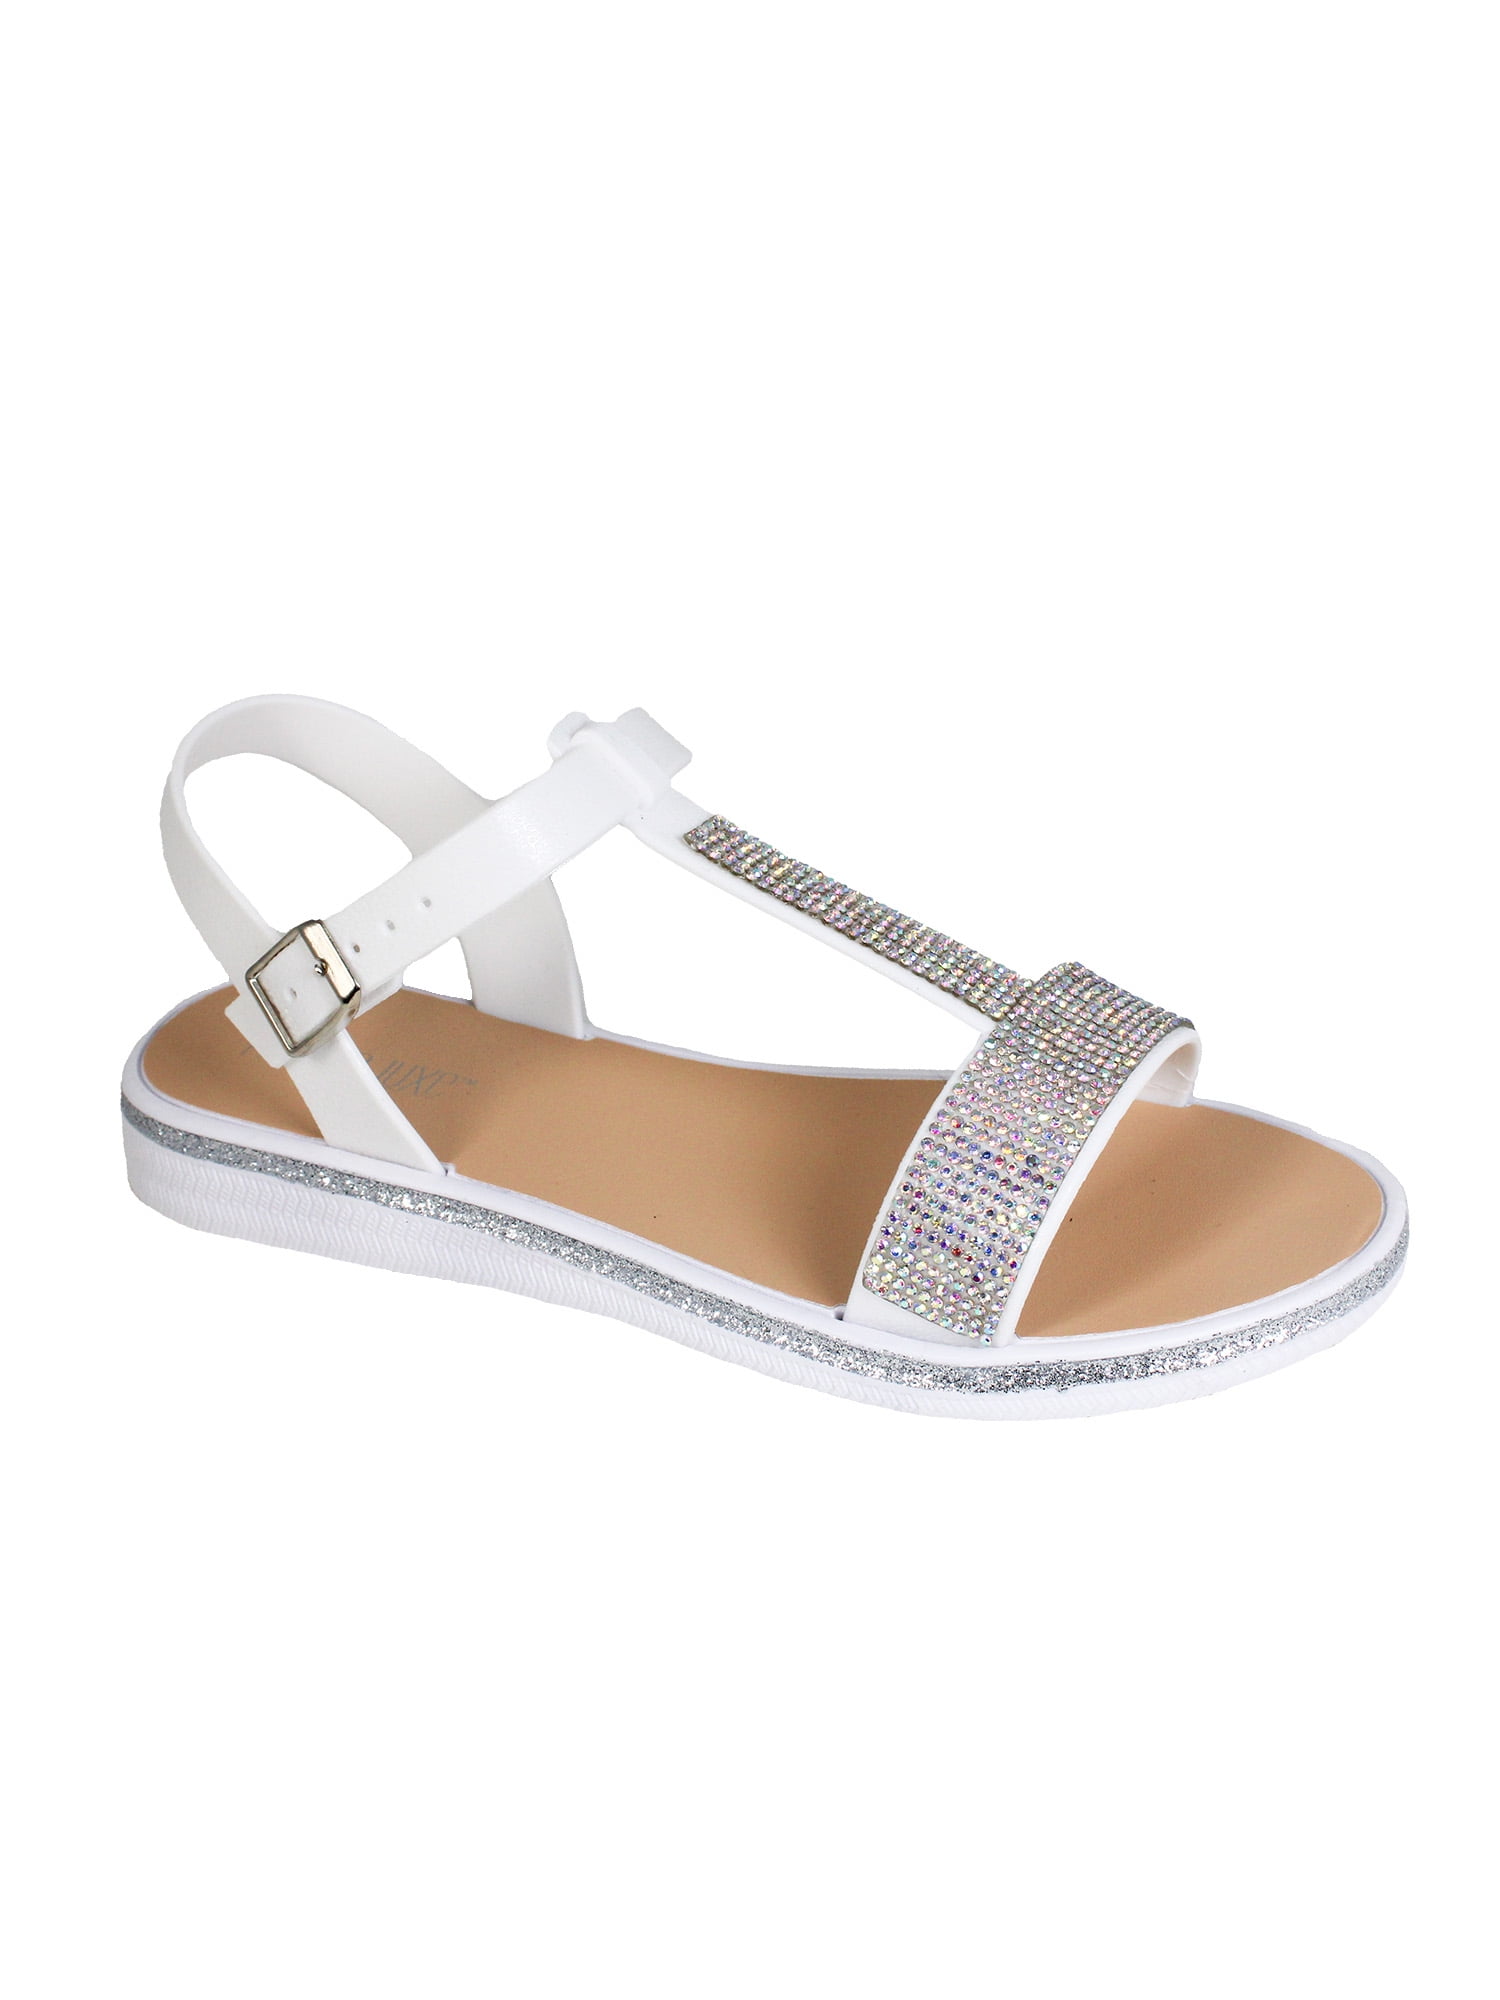 Fifth & Luxe Women's Strappy Rhinestone Glitter Flat Sandals, Sizes 5/6 ...